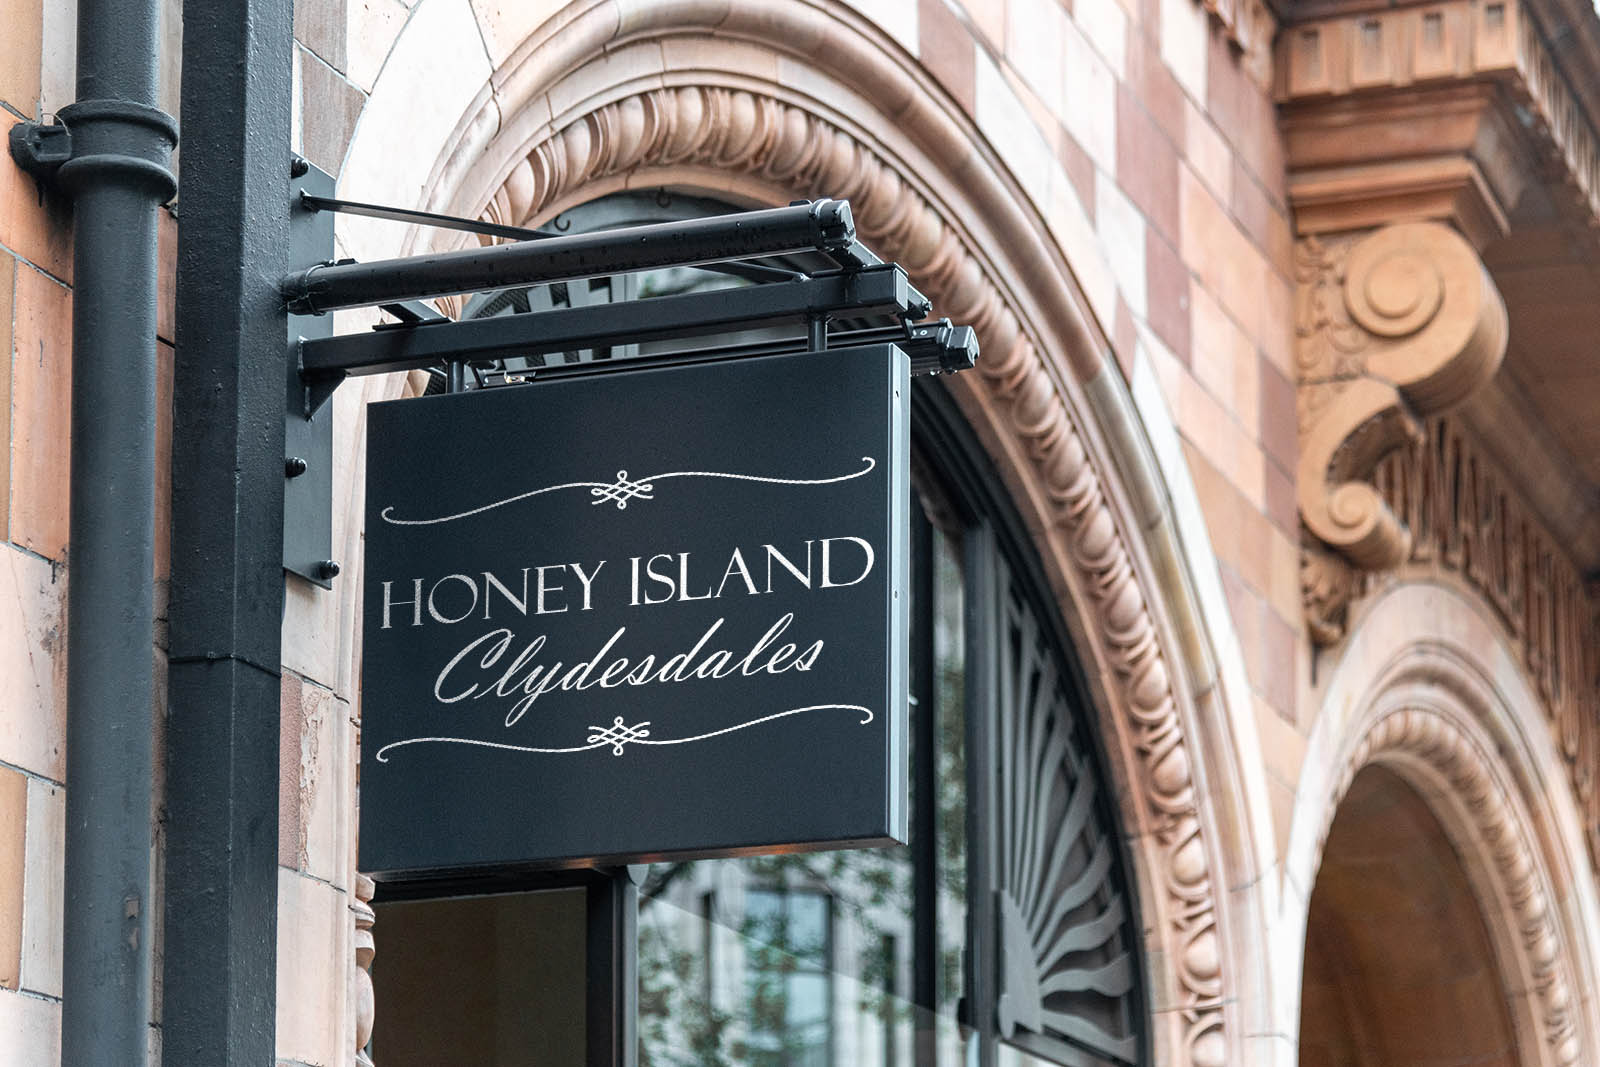 Honey Island Clydesdales logo